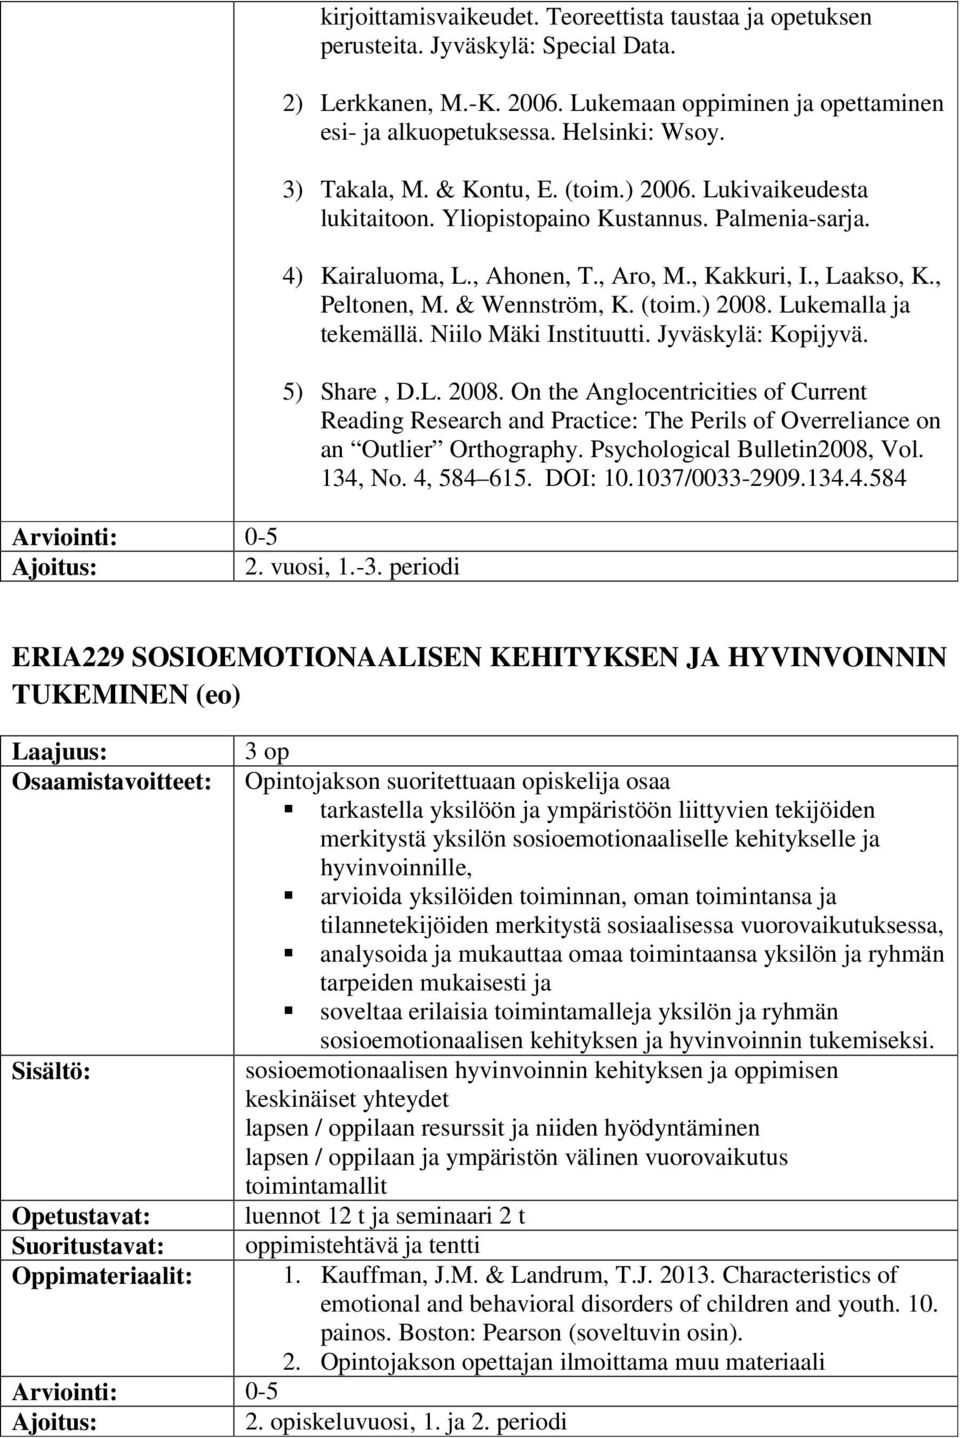 4) Kairaluoma, L., Ahonen, T., Aro, M., Kakkuri, I., Laakso, K., Peltonen, M. & Wennström, K. (toim.) 2008.